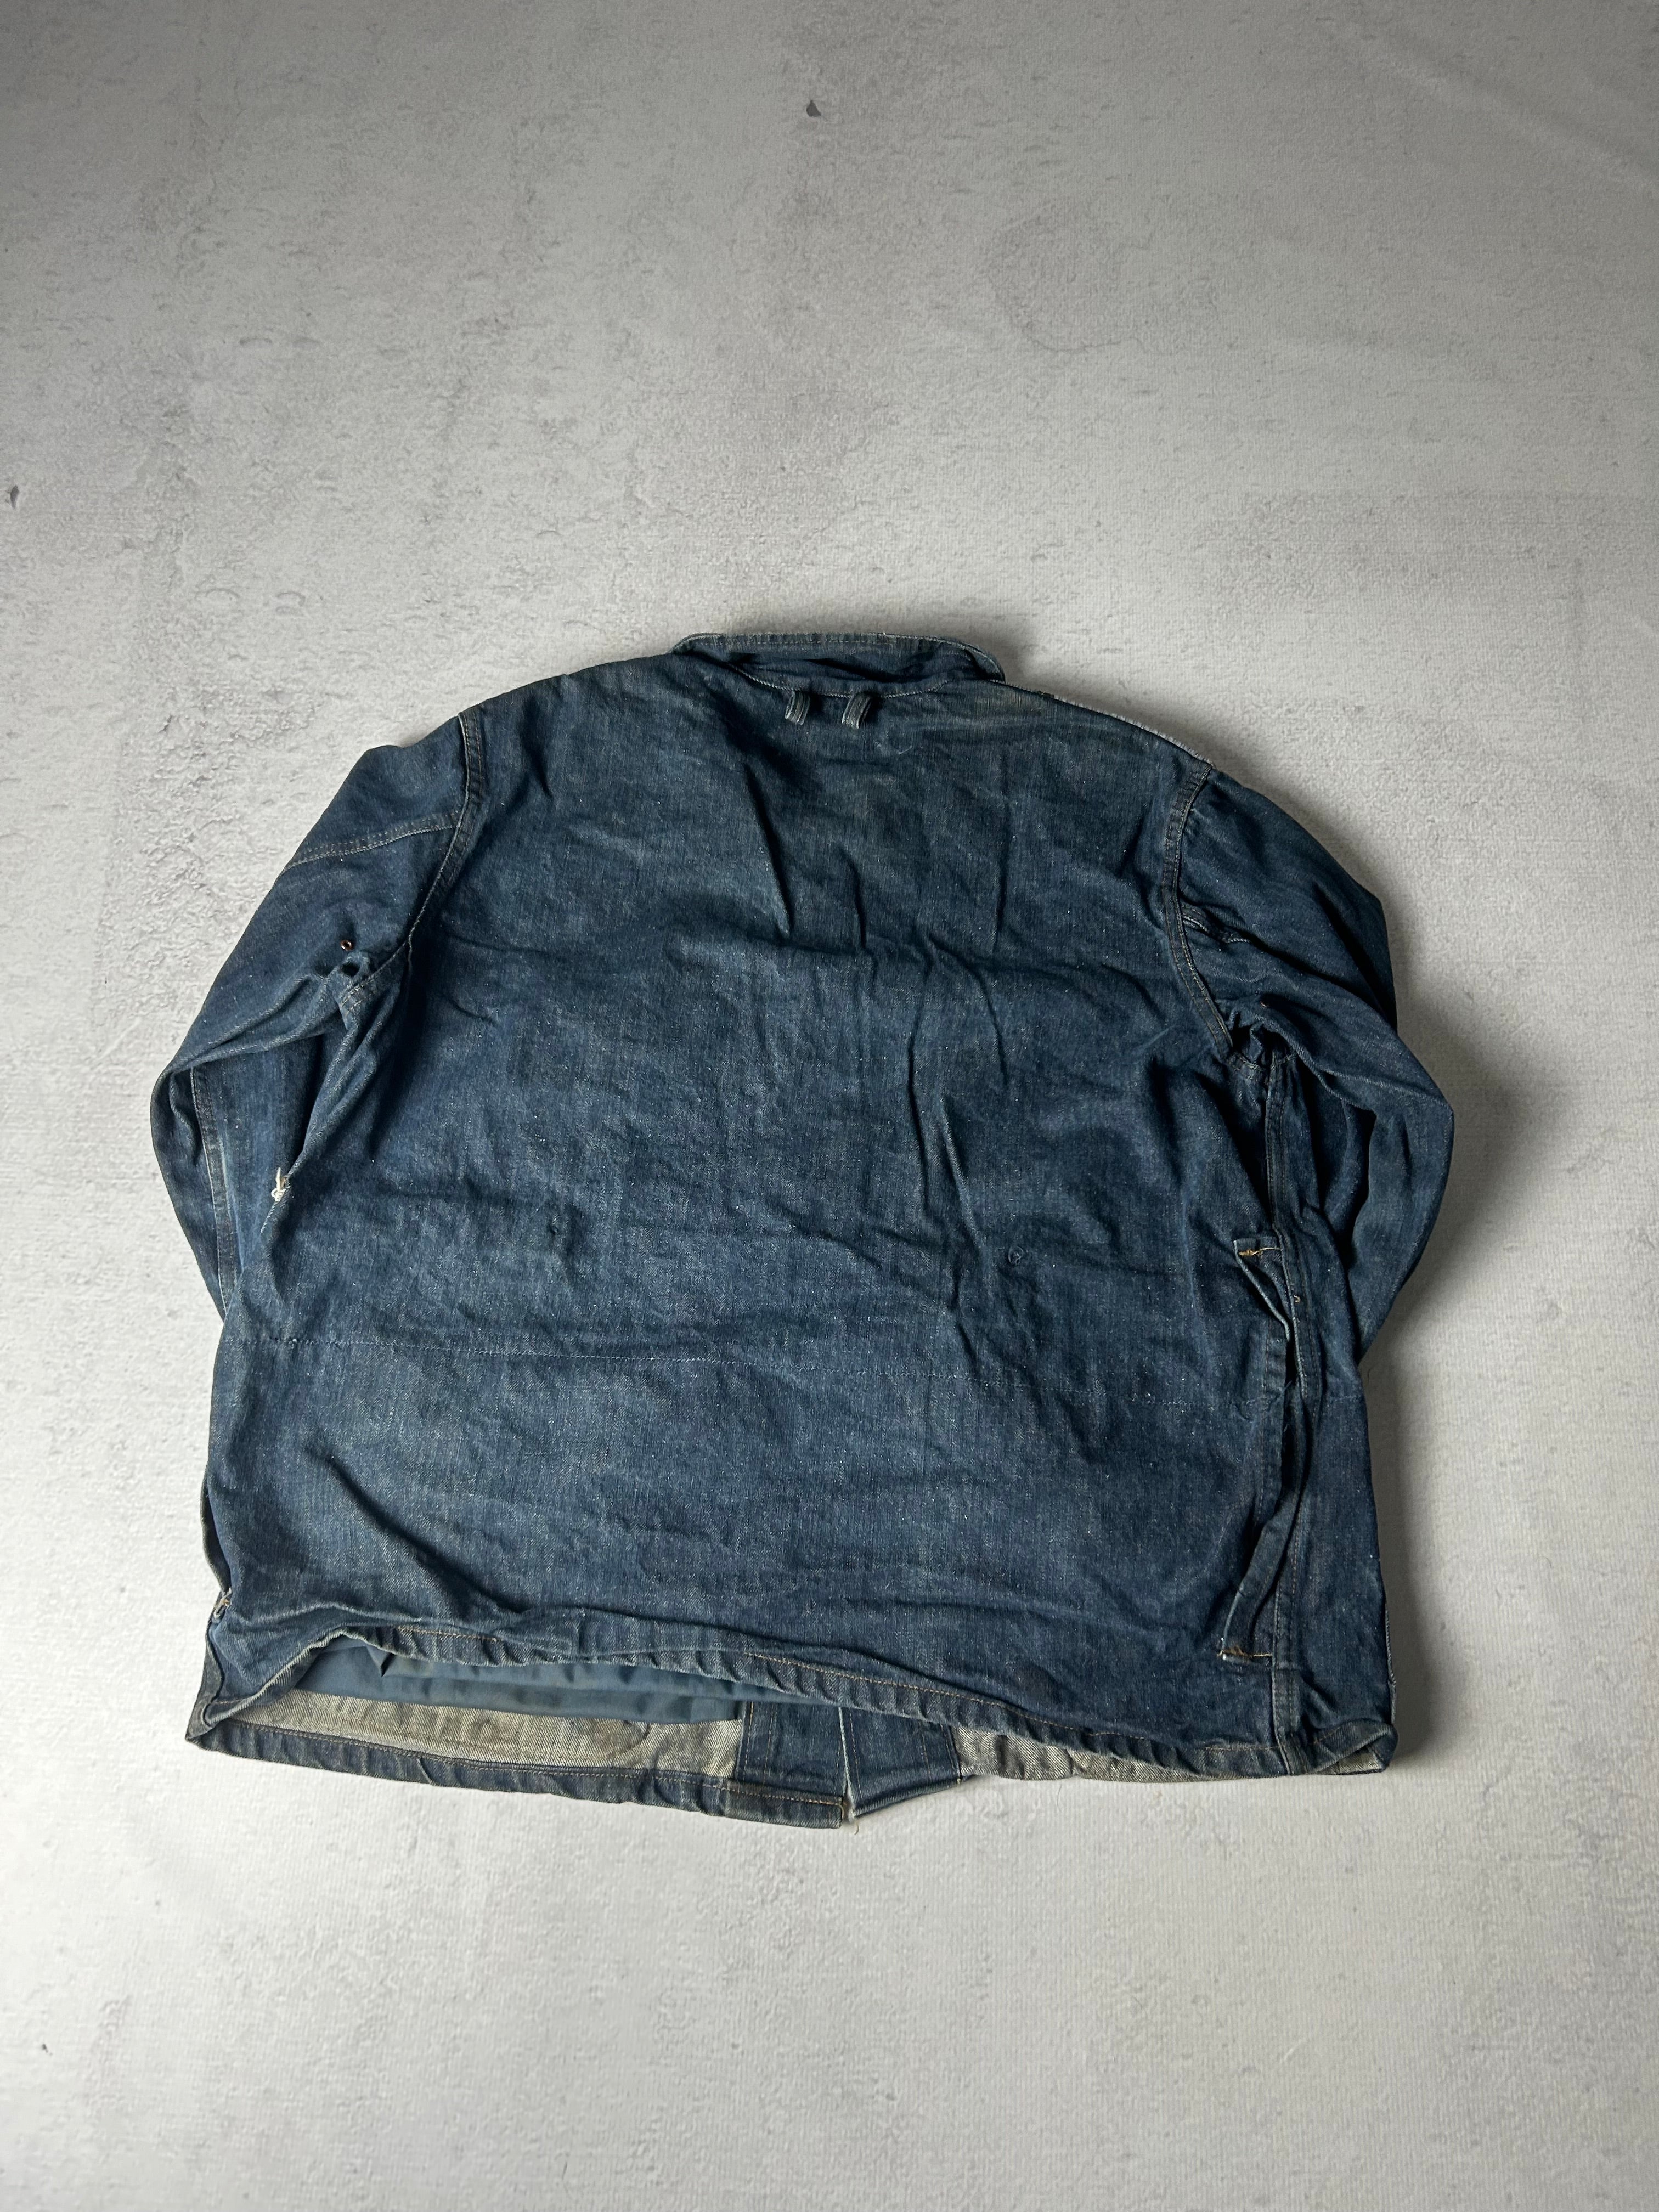 Vintage 90s Denim Jacket - Men's XL